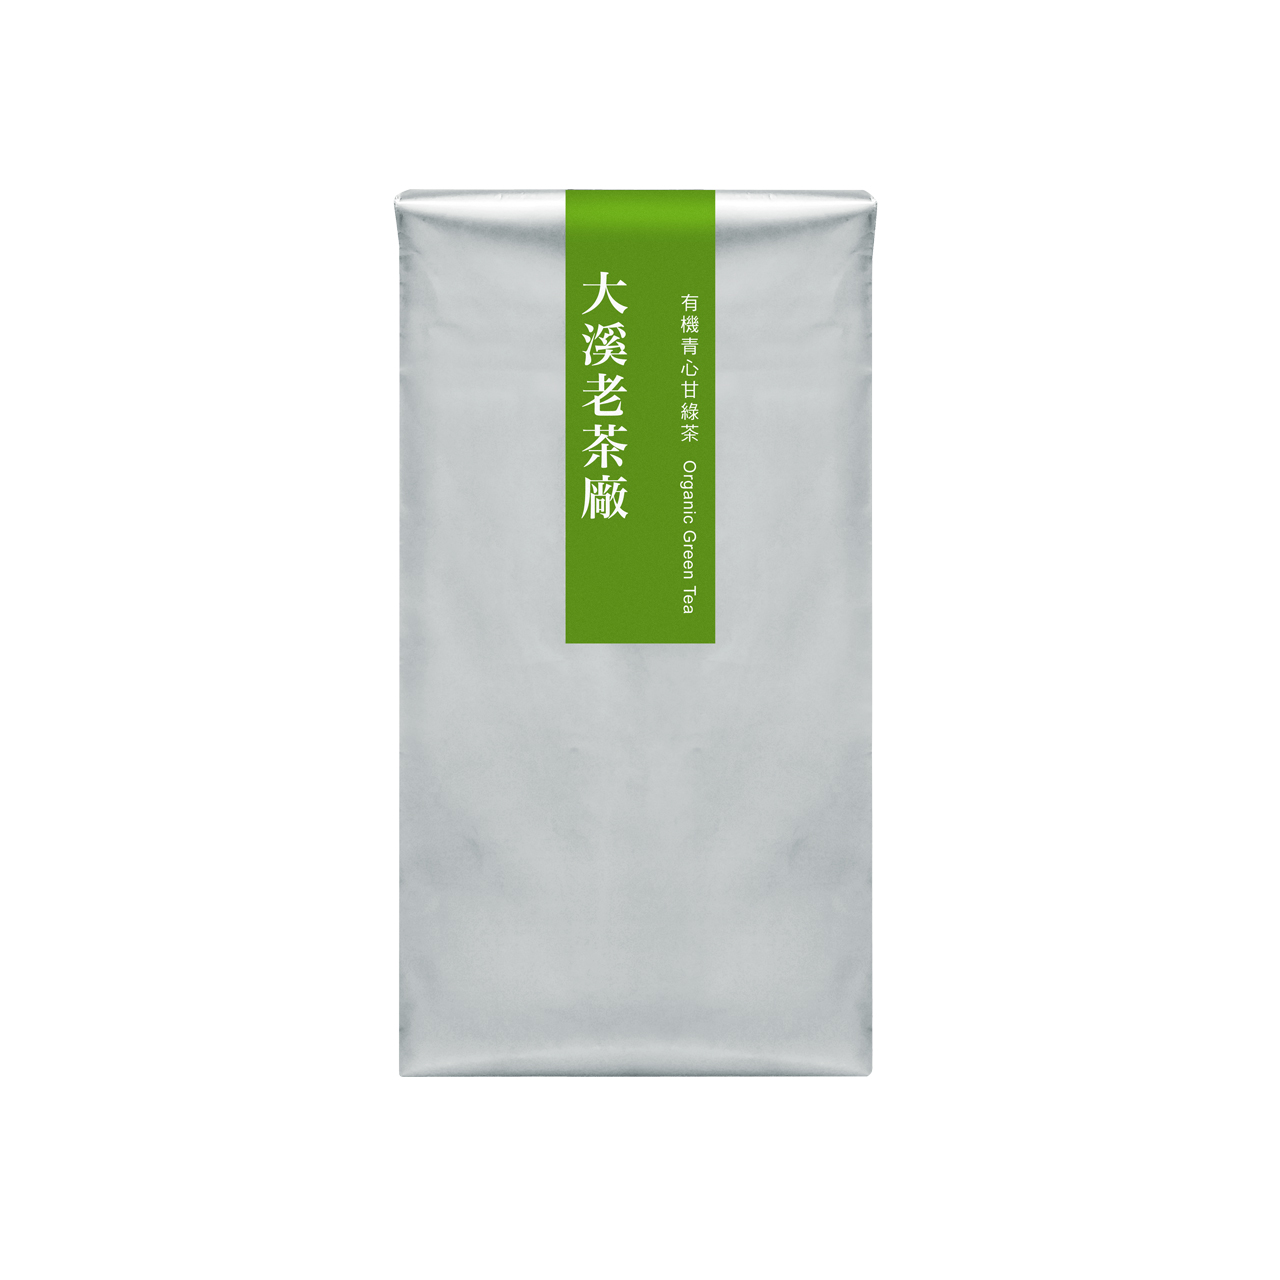 Daxi-Green Tea (Refill)